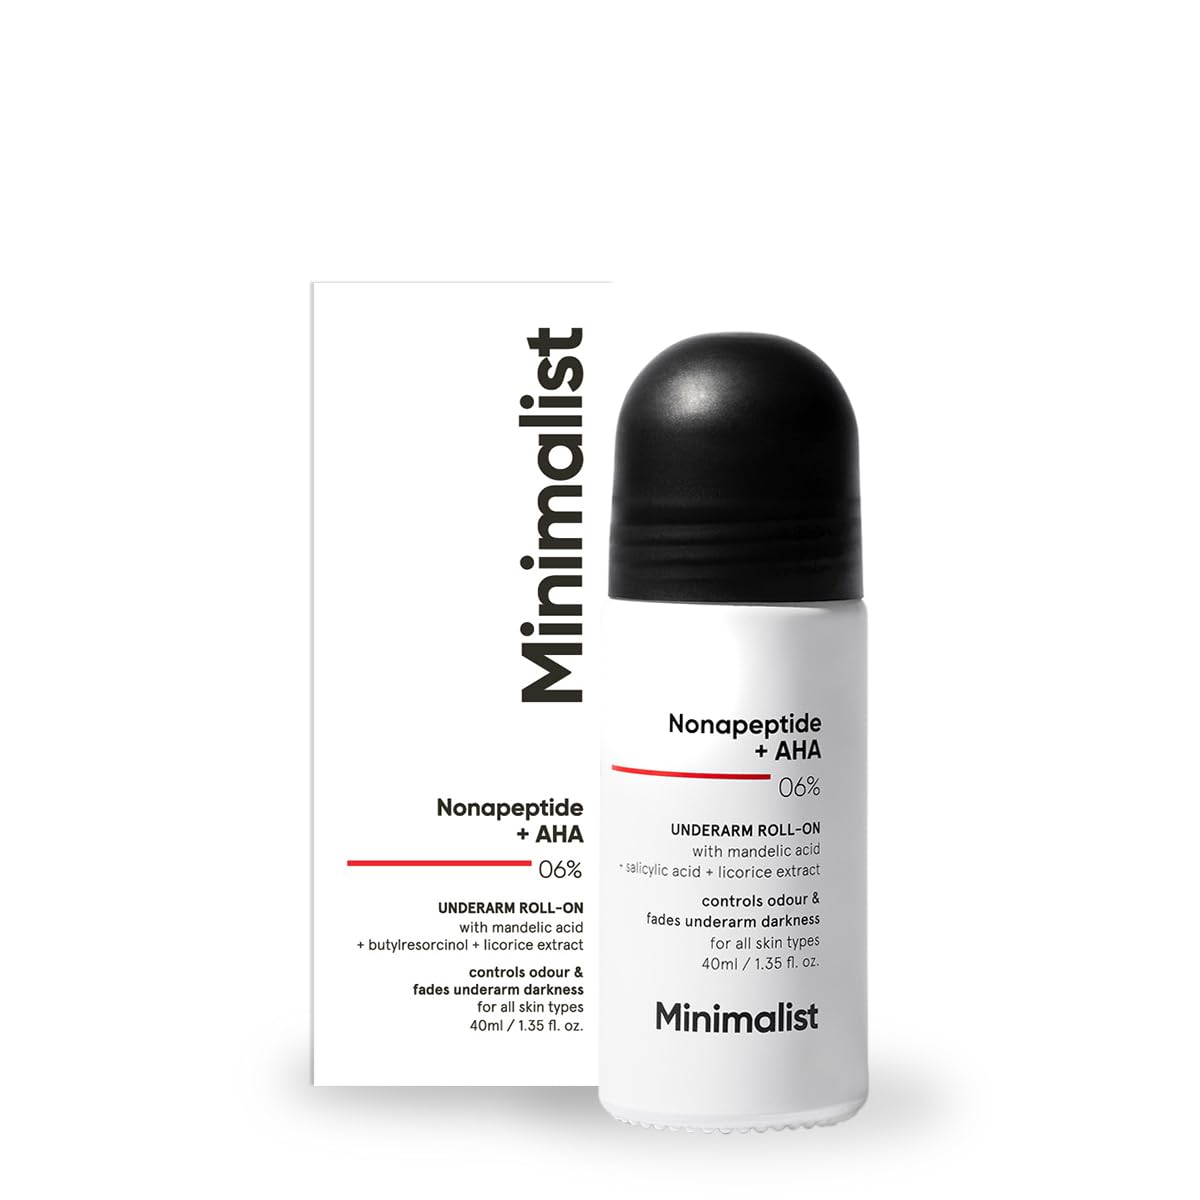 Minimalist Nonapeptide + AHA 06% Underarm Roll-On, 40ml